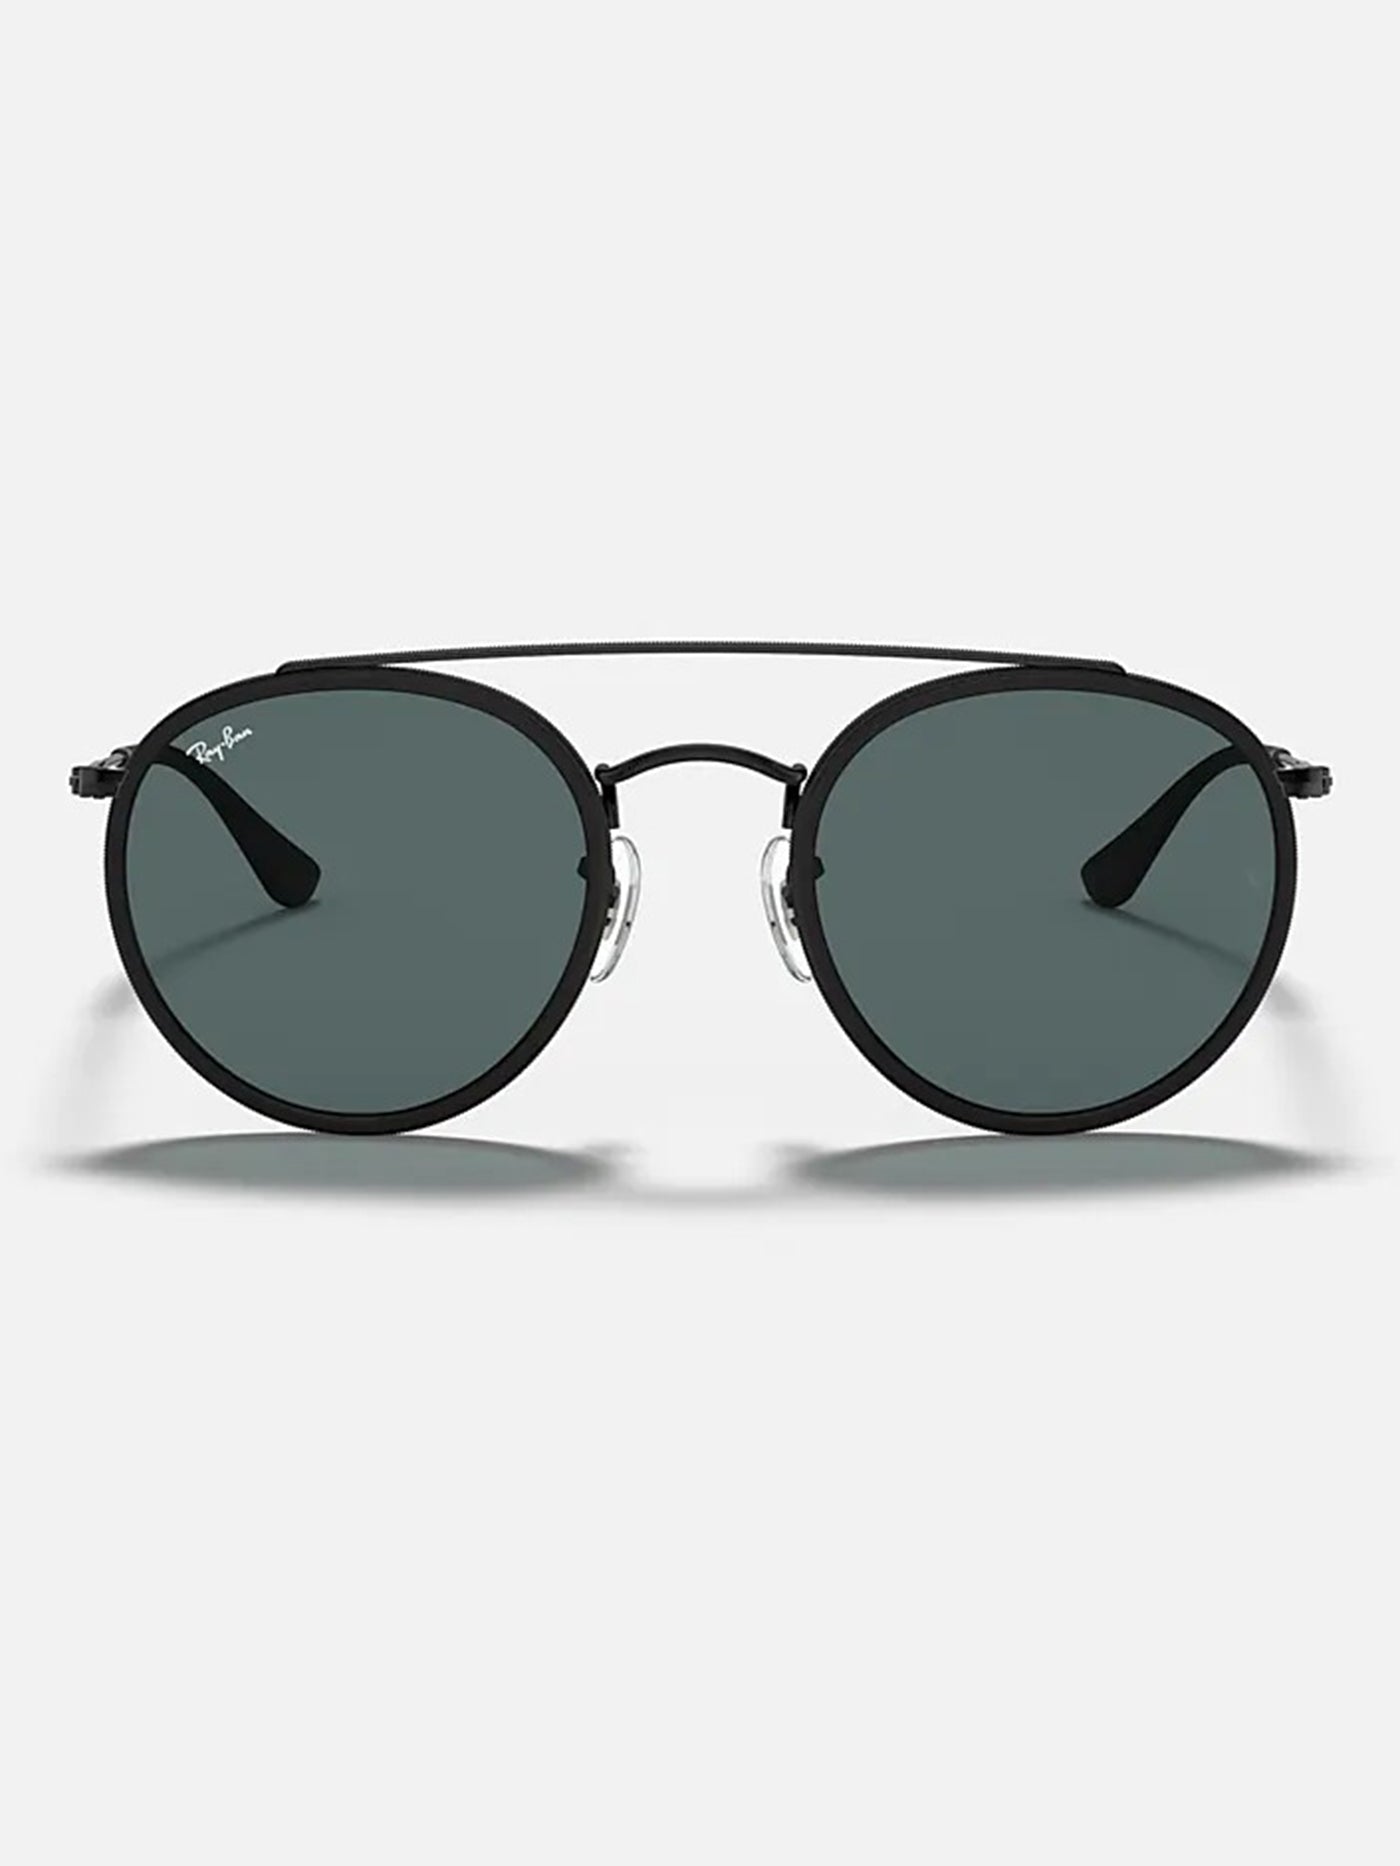 Ray-Ban Round Double Bridge Black/Blue Grey Sunglasses